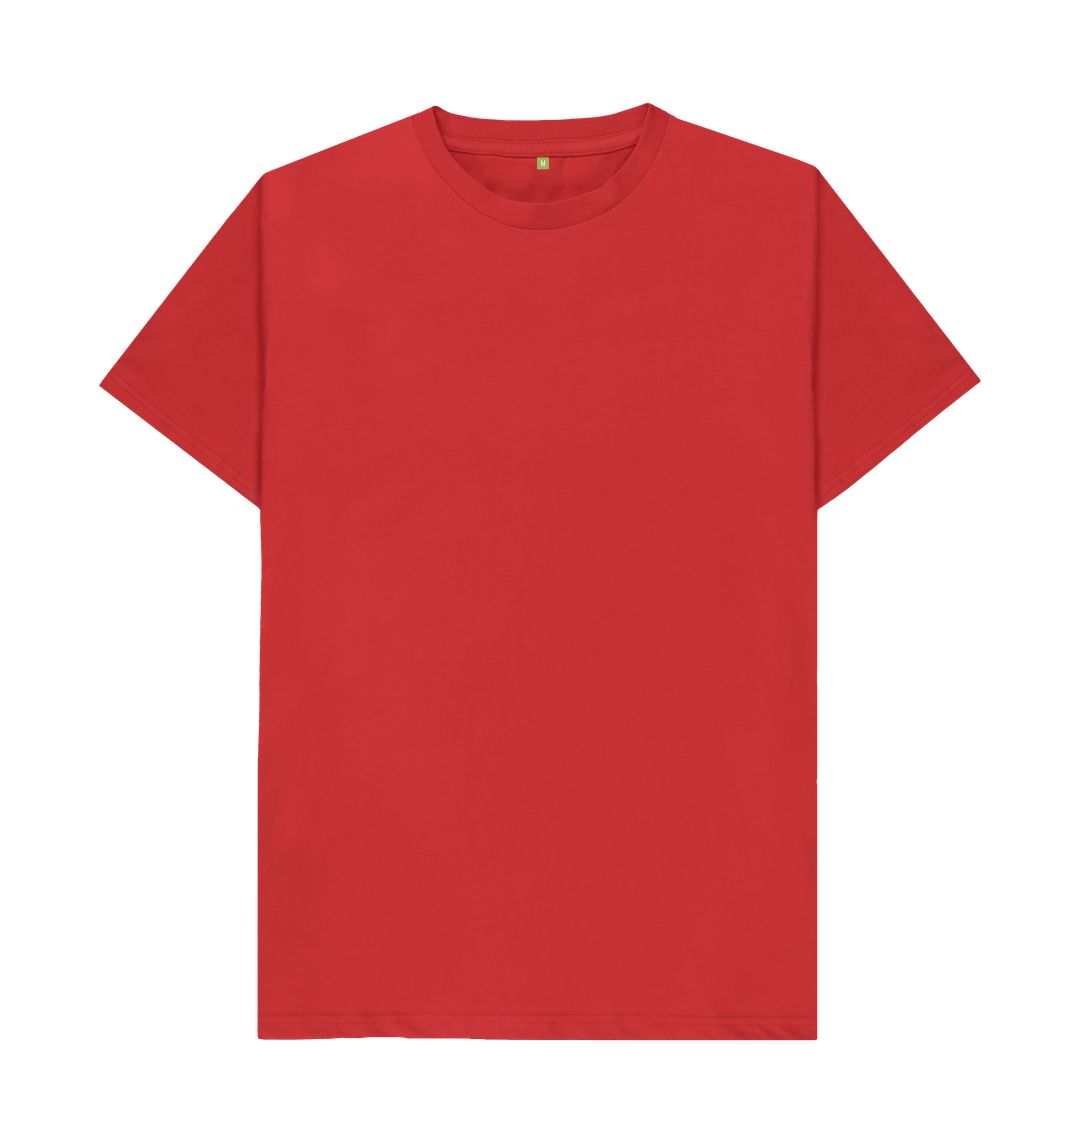 Red Men's organic cotton t-shirt